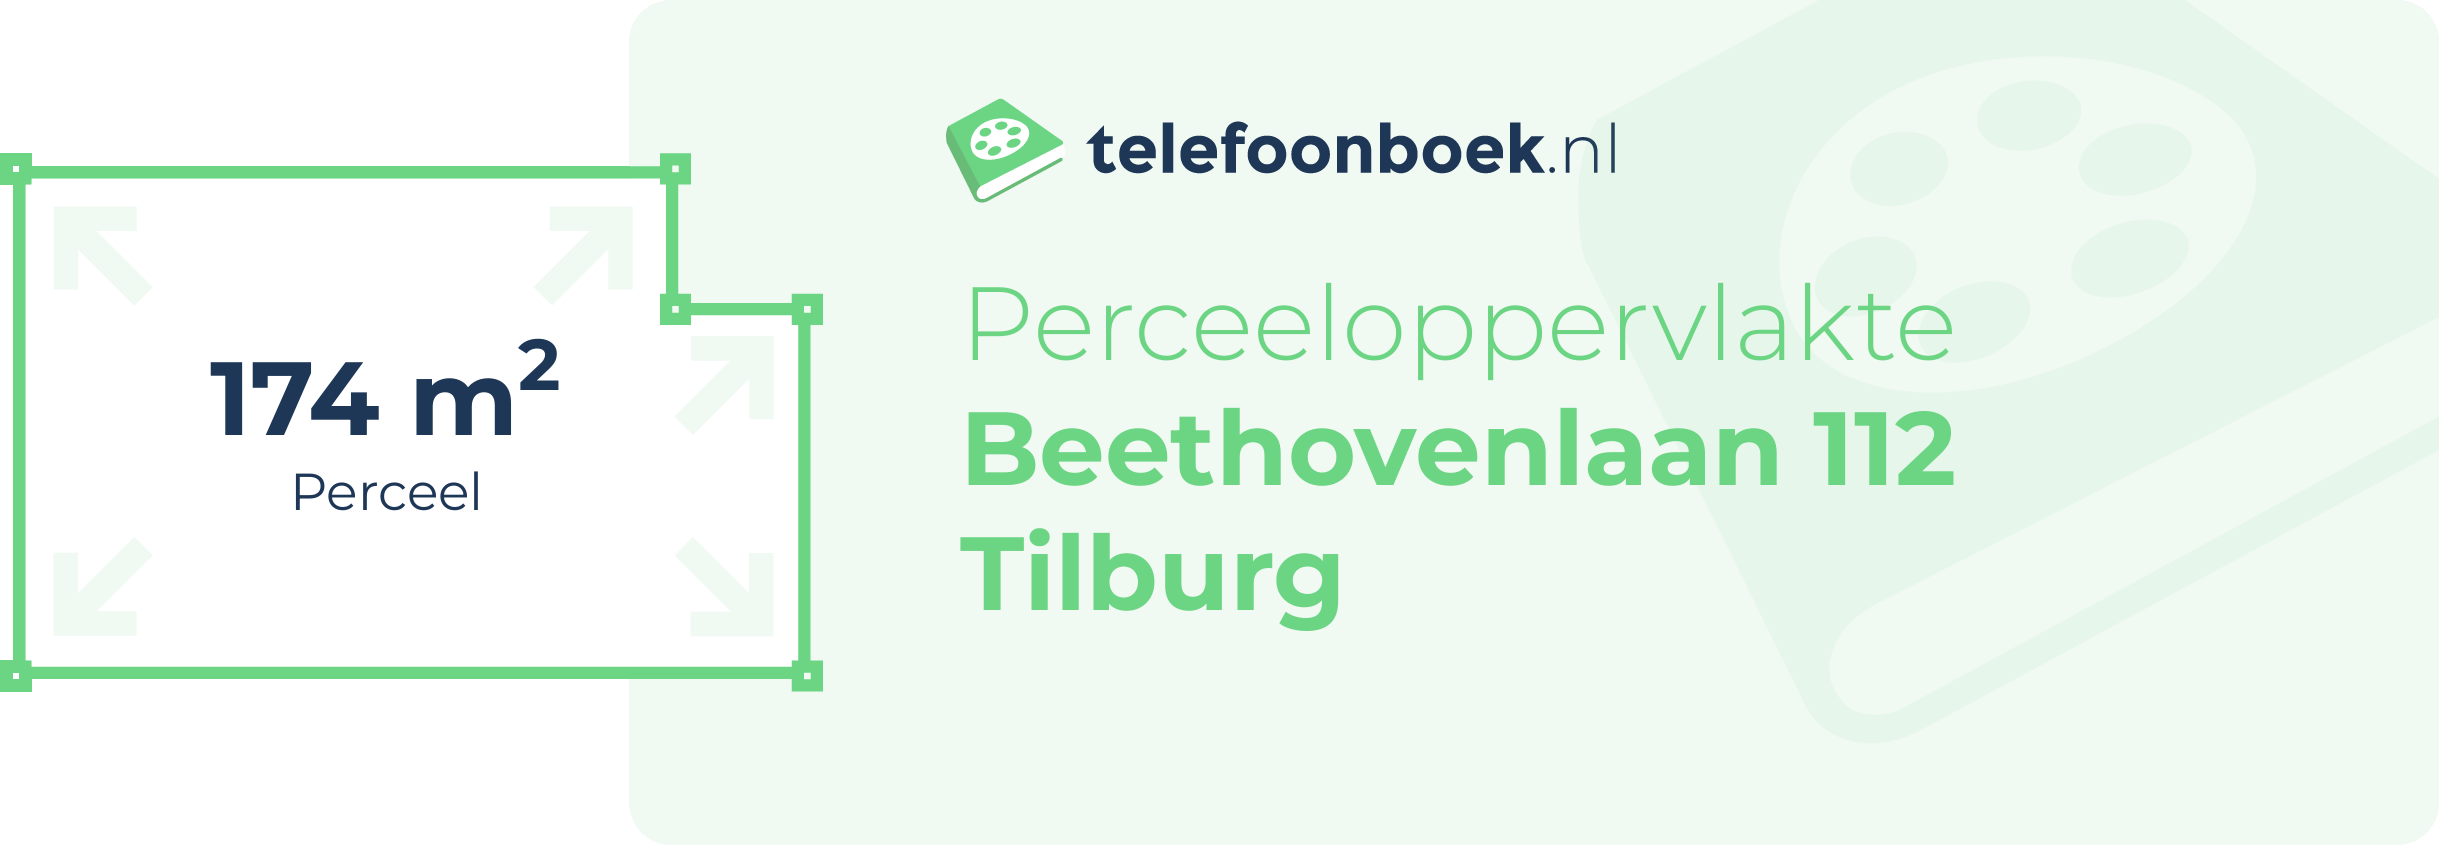 Perceeloppervlakte Beethovenlaan 112 Tilburg